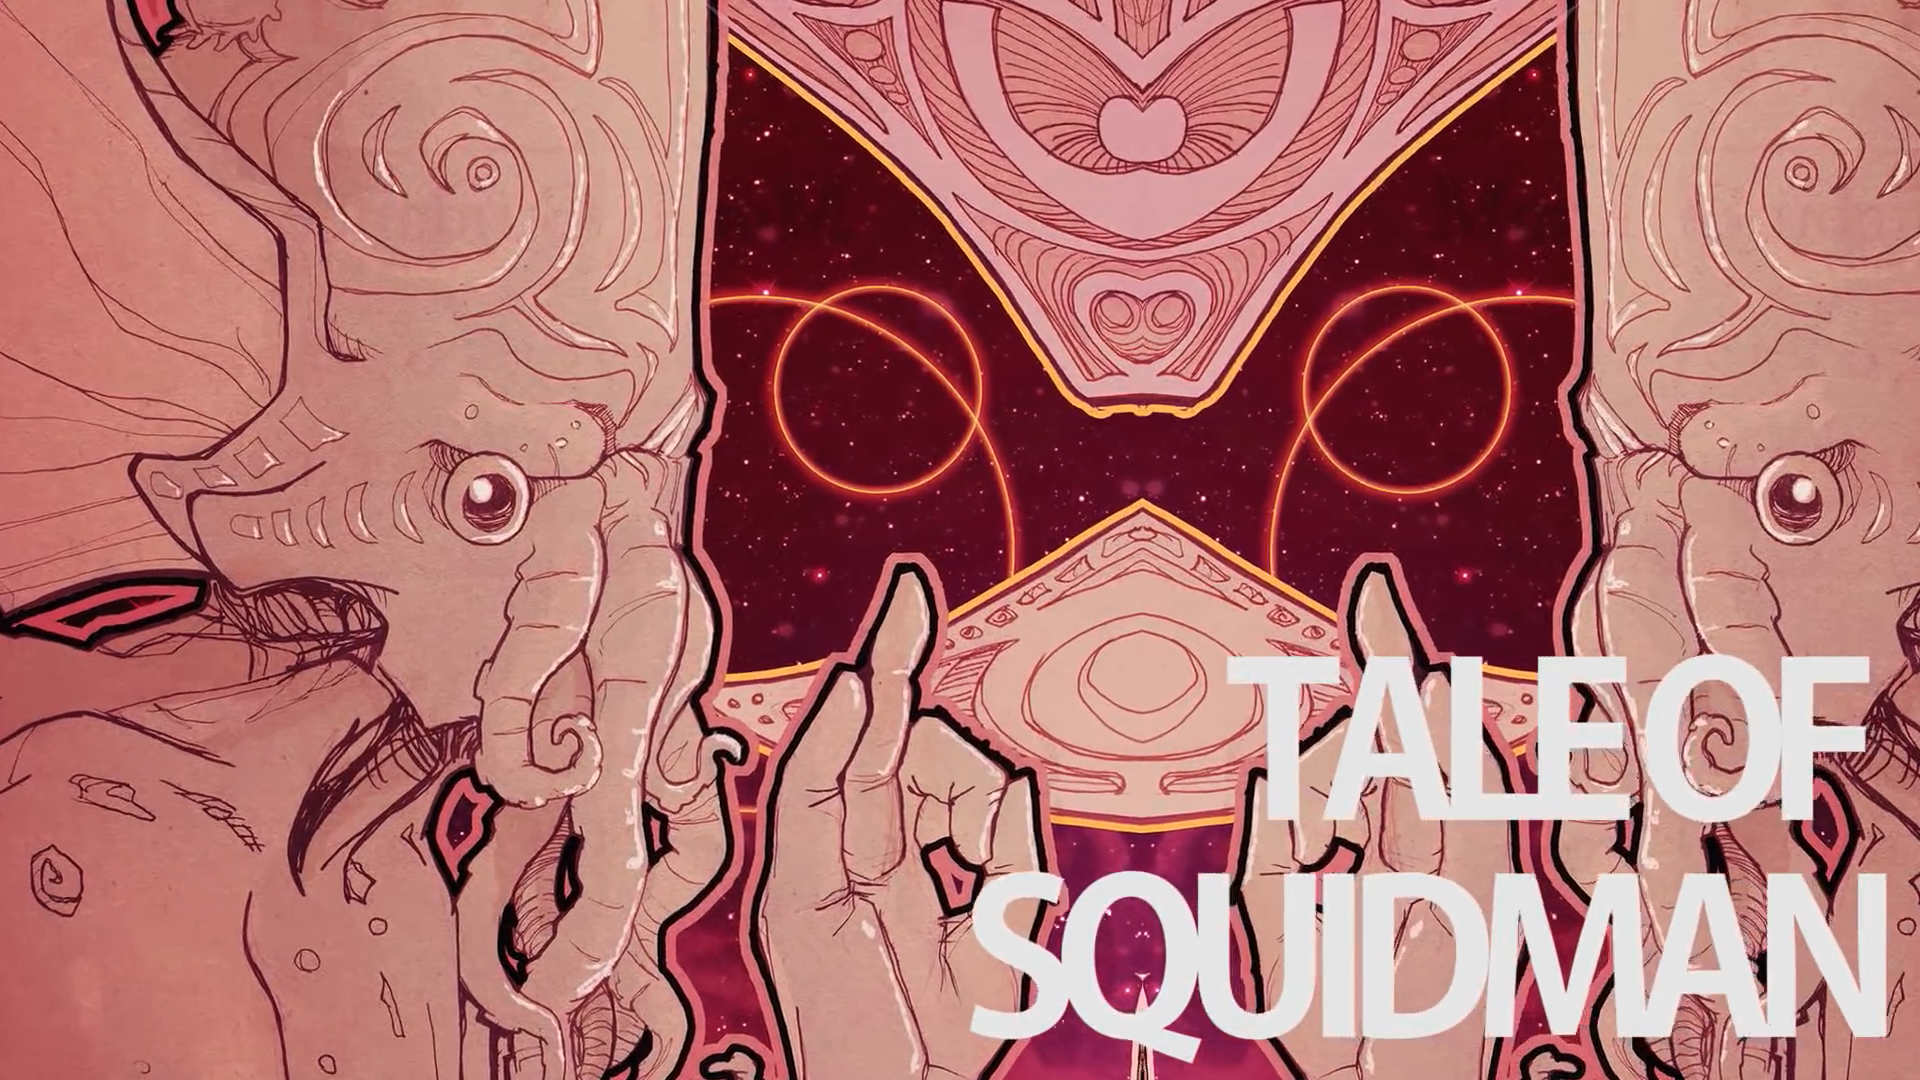 Skraeckoedlan - Tale of Squidman (Sagor, 2015 album preview)